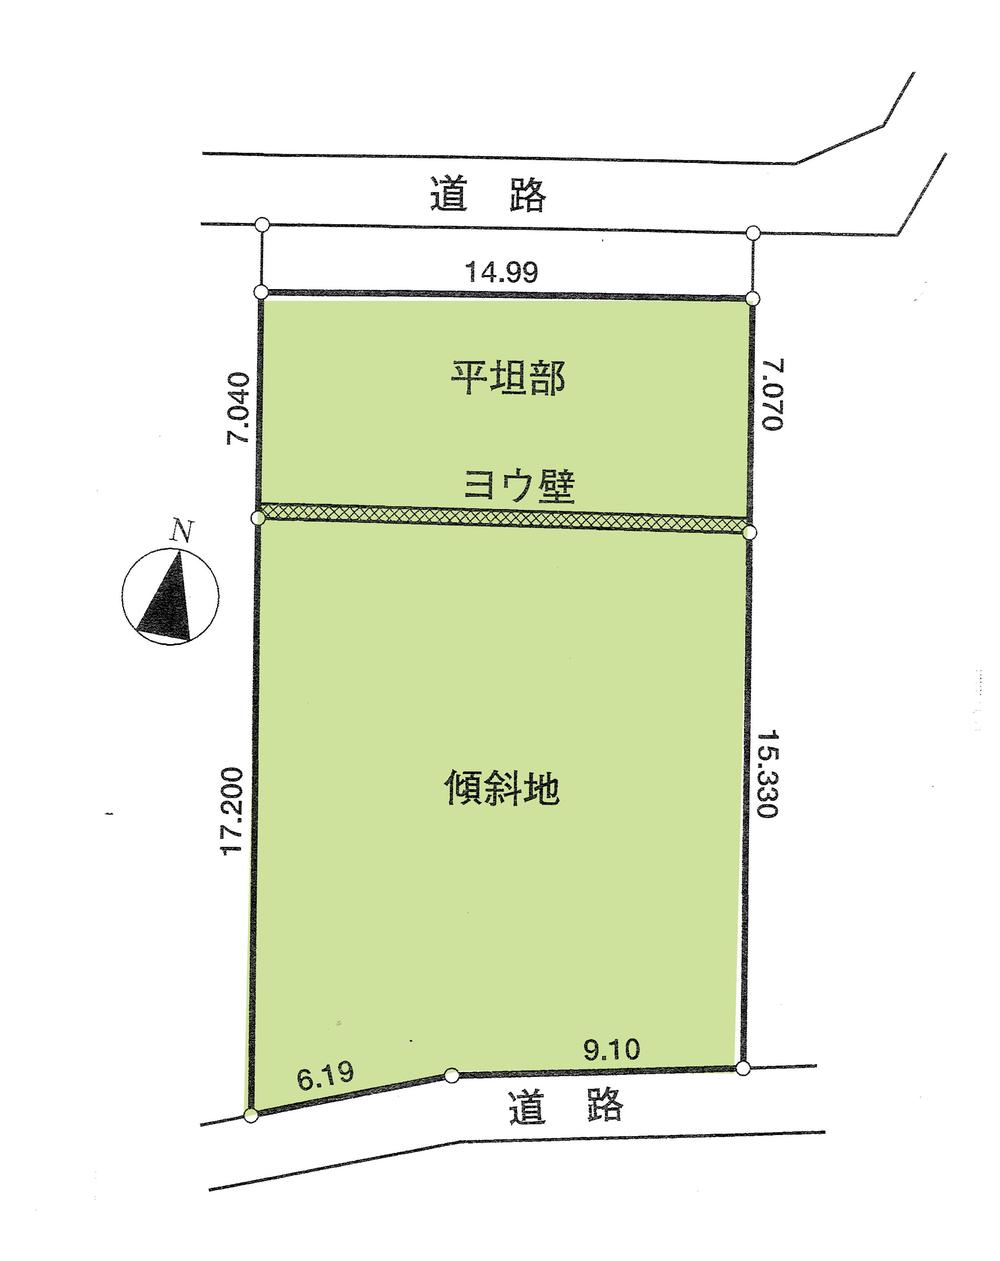 Compartment figure. Land price 5.44 million yen, Land area 360 sq m compartment view